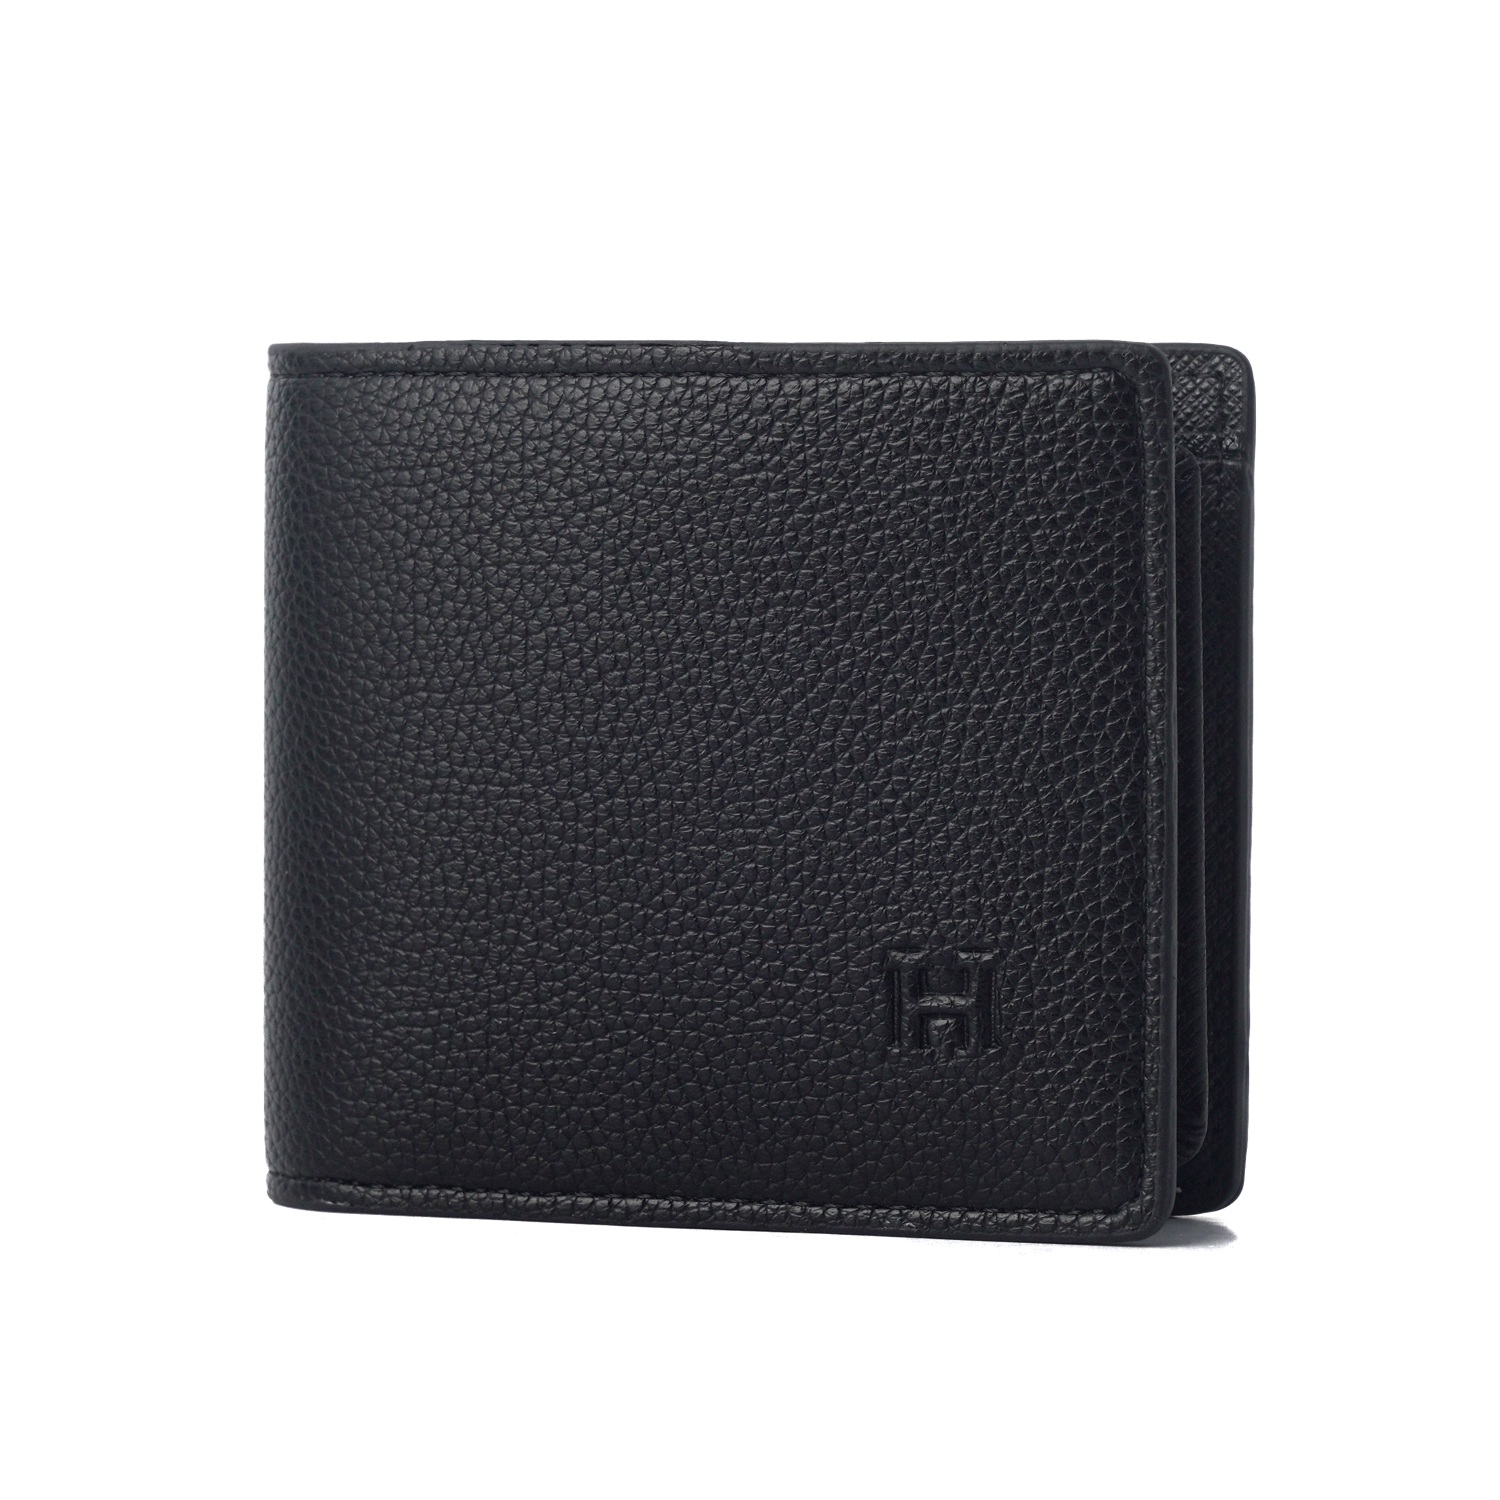 TOKOKOE - Dompet Pria Bahan Kulit Premium Import - H Togo Leather Black